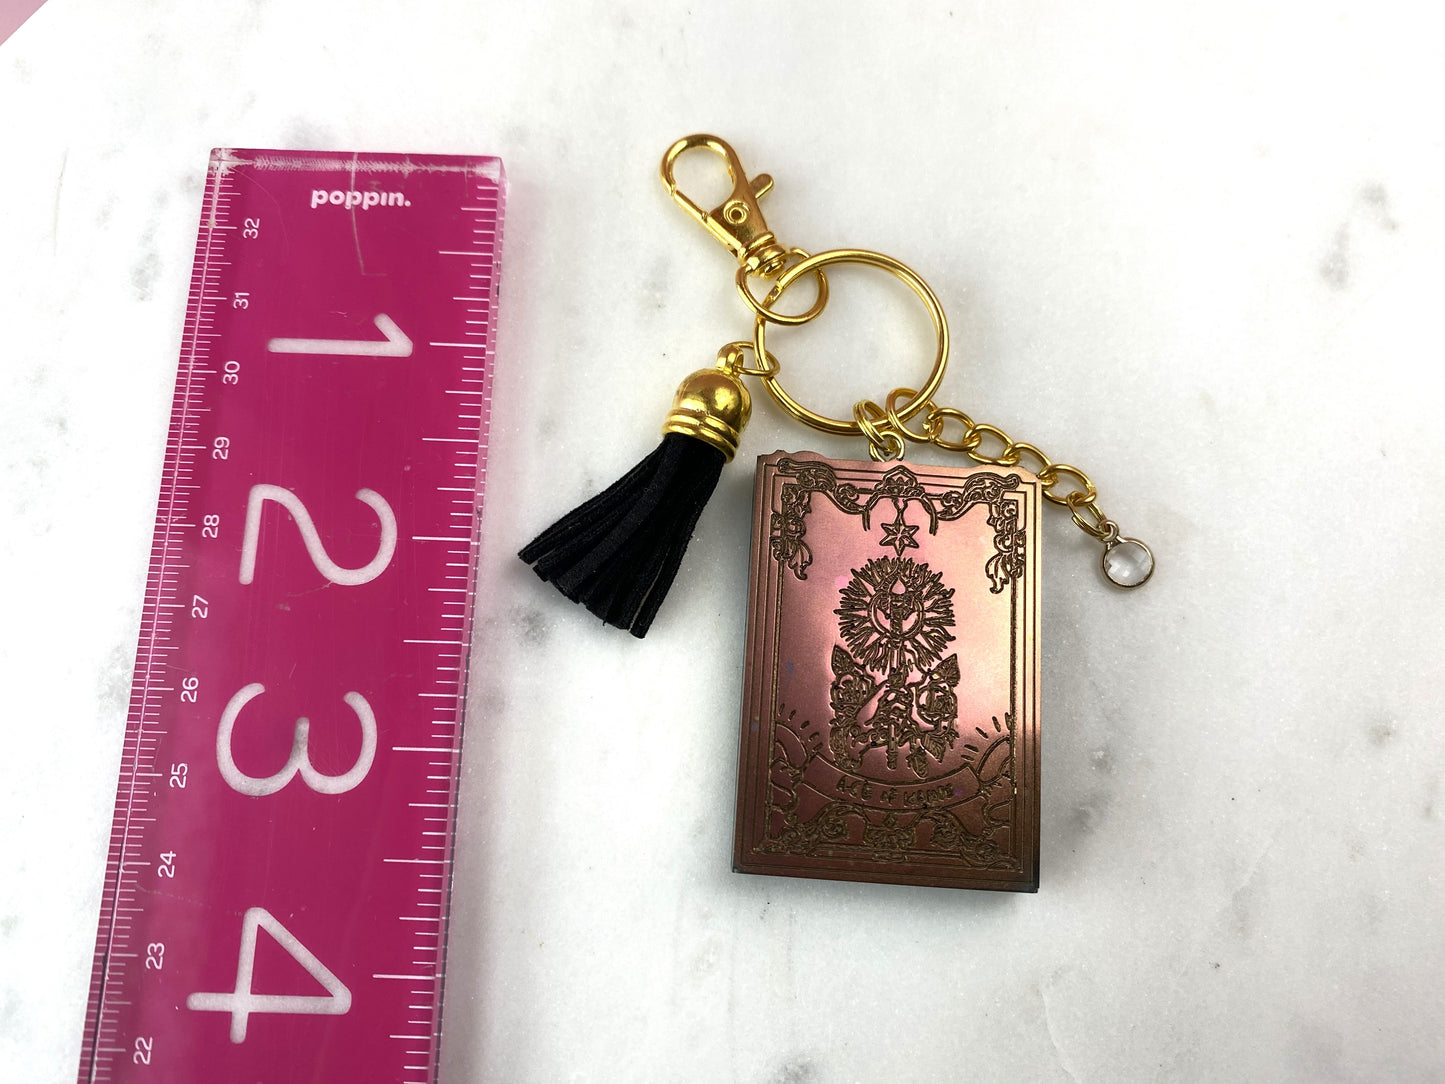 Tarot Card Keychain | Ace of Wands | Handmade Accessories